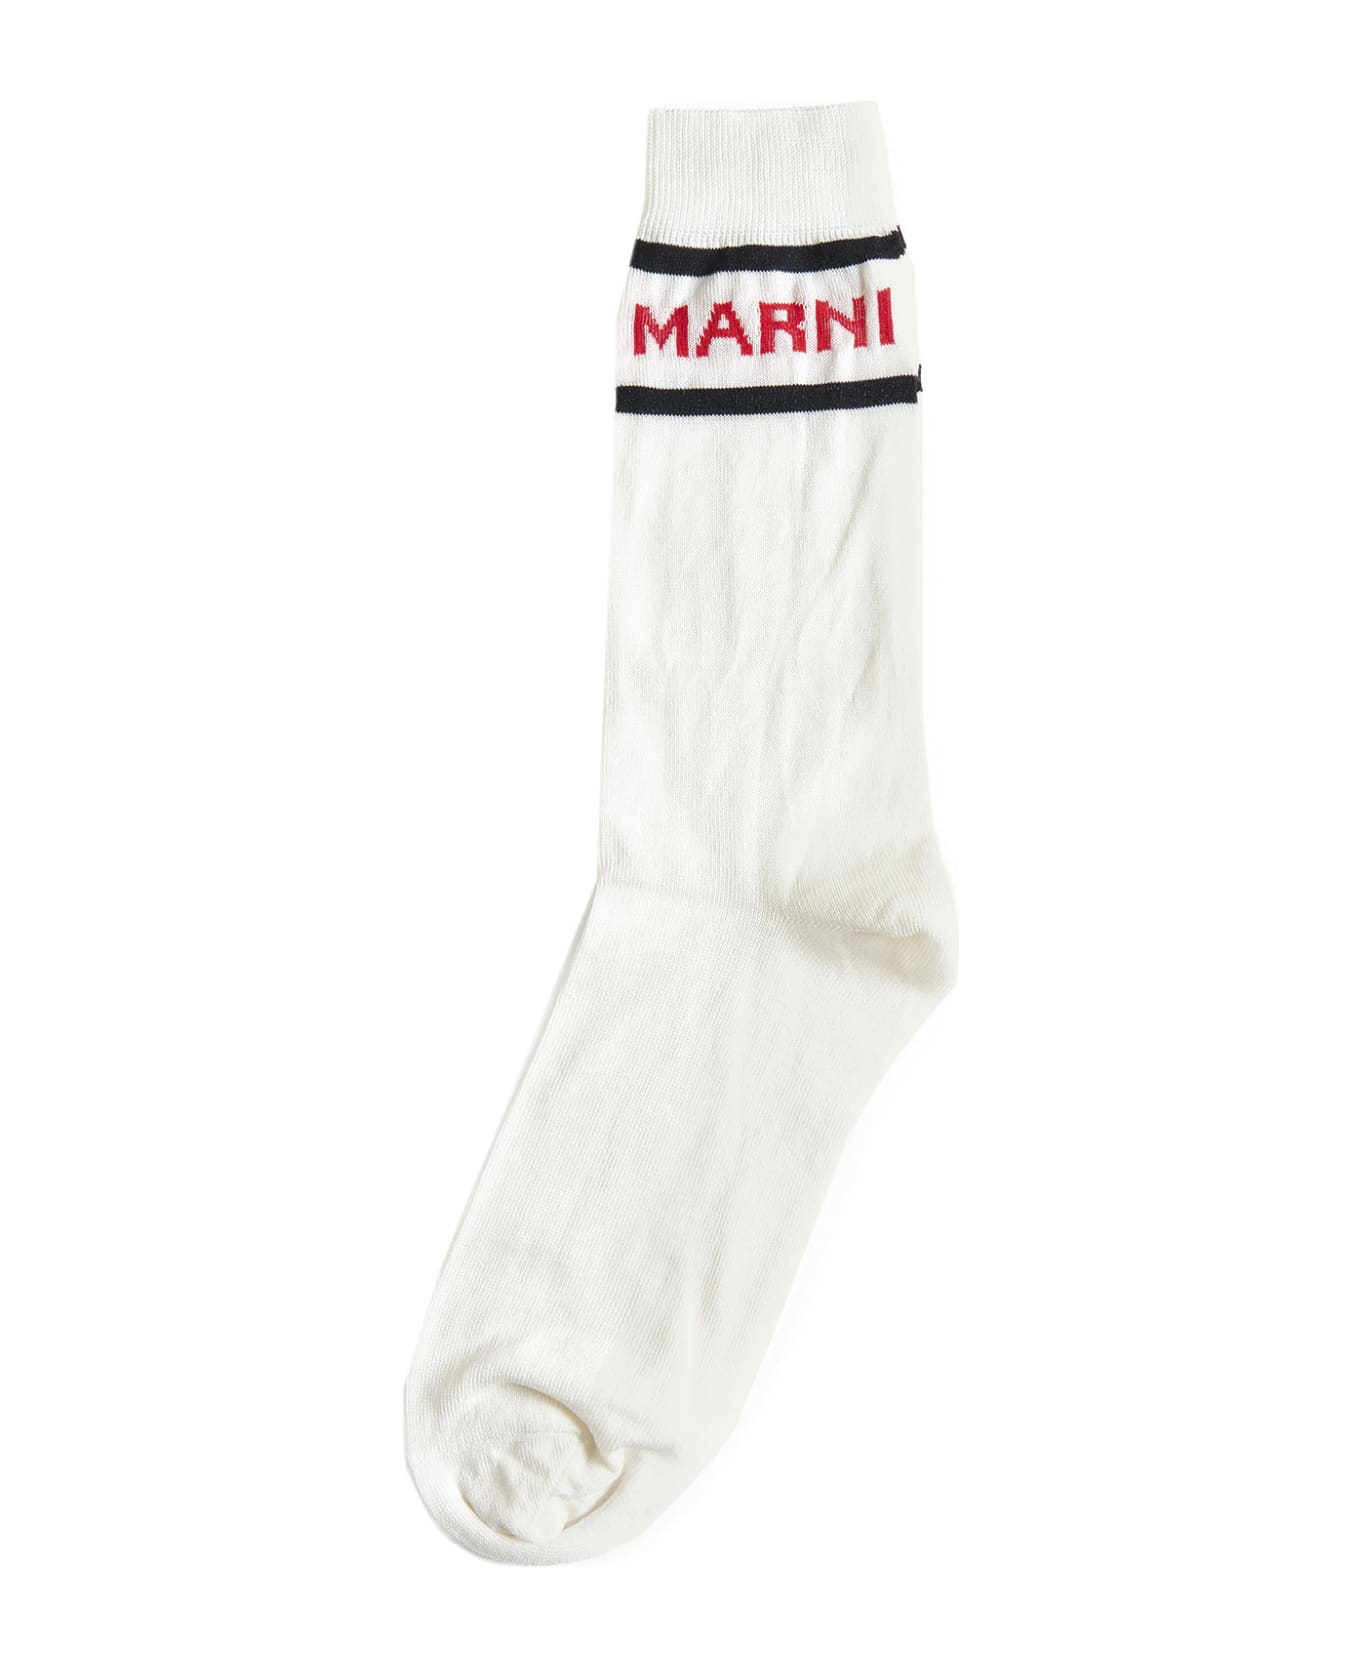 Marni Socks - Lily white